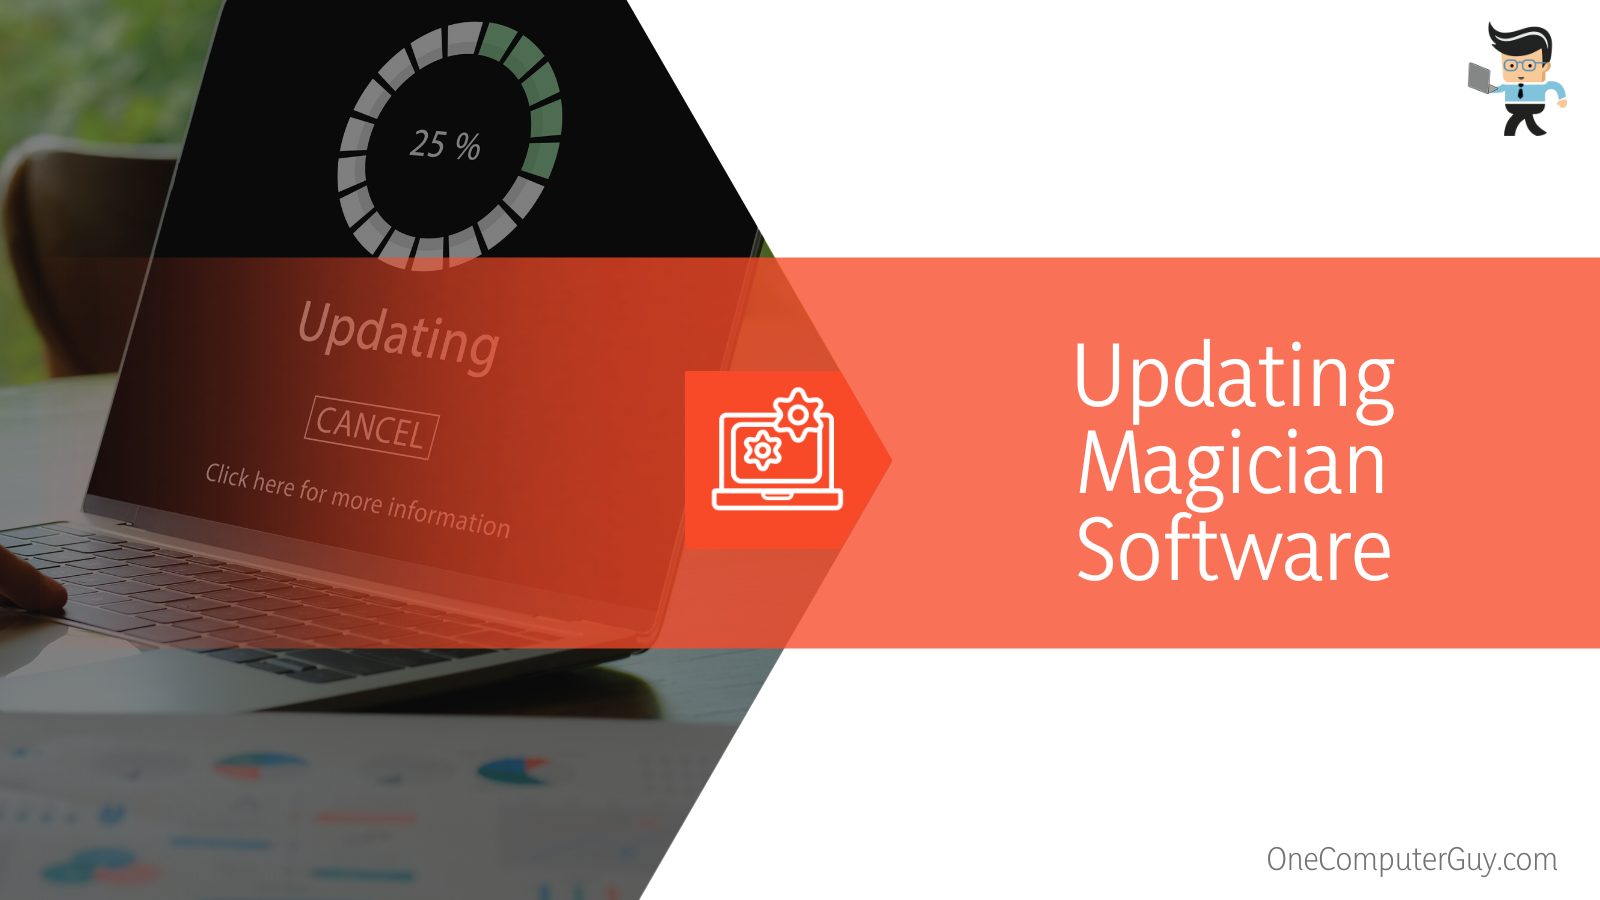 Updating Magician Software